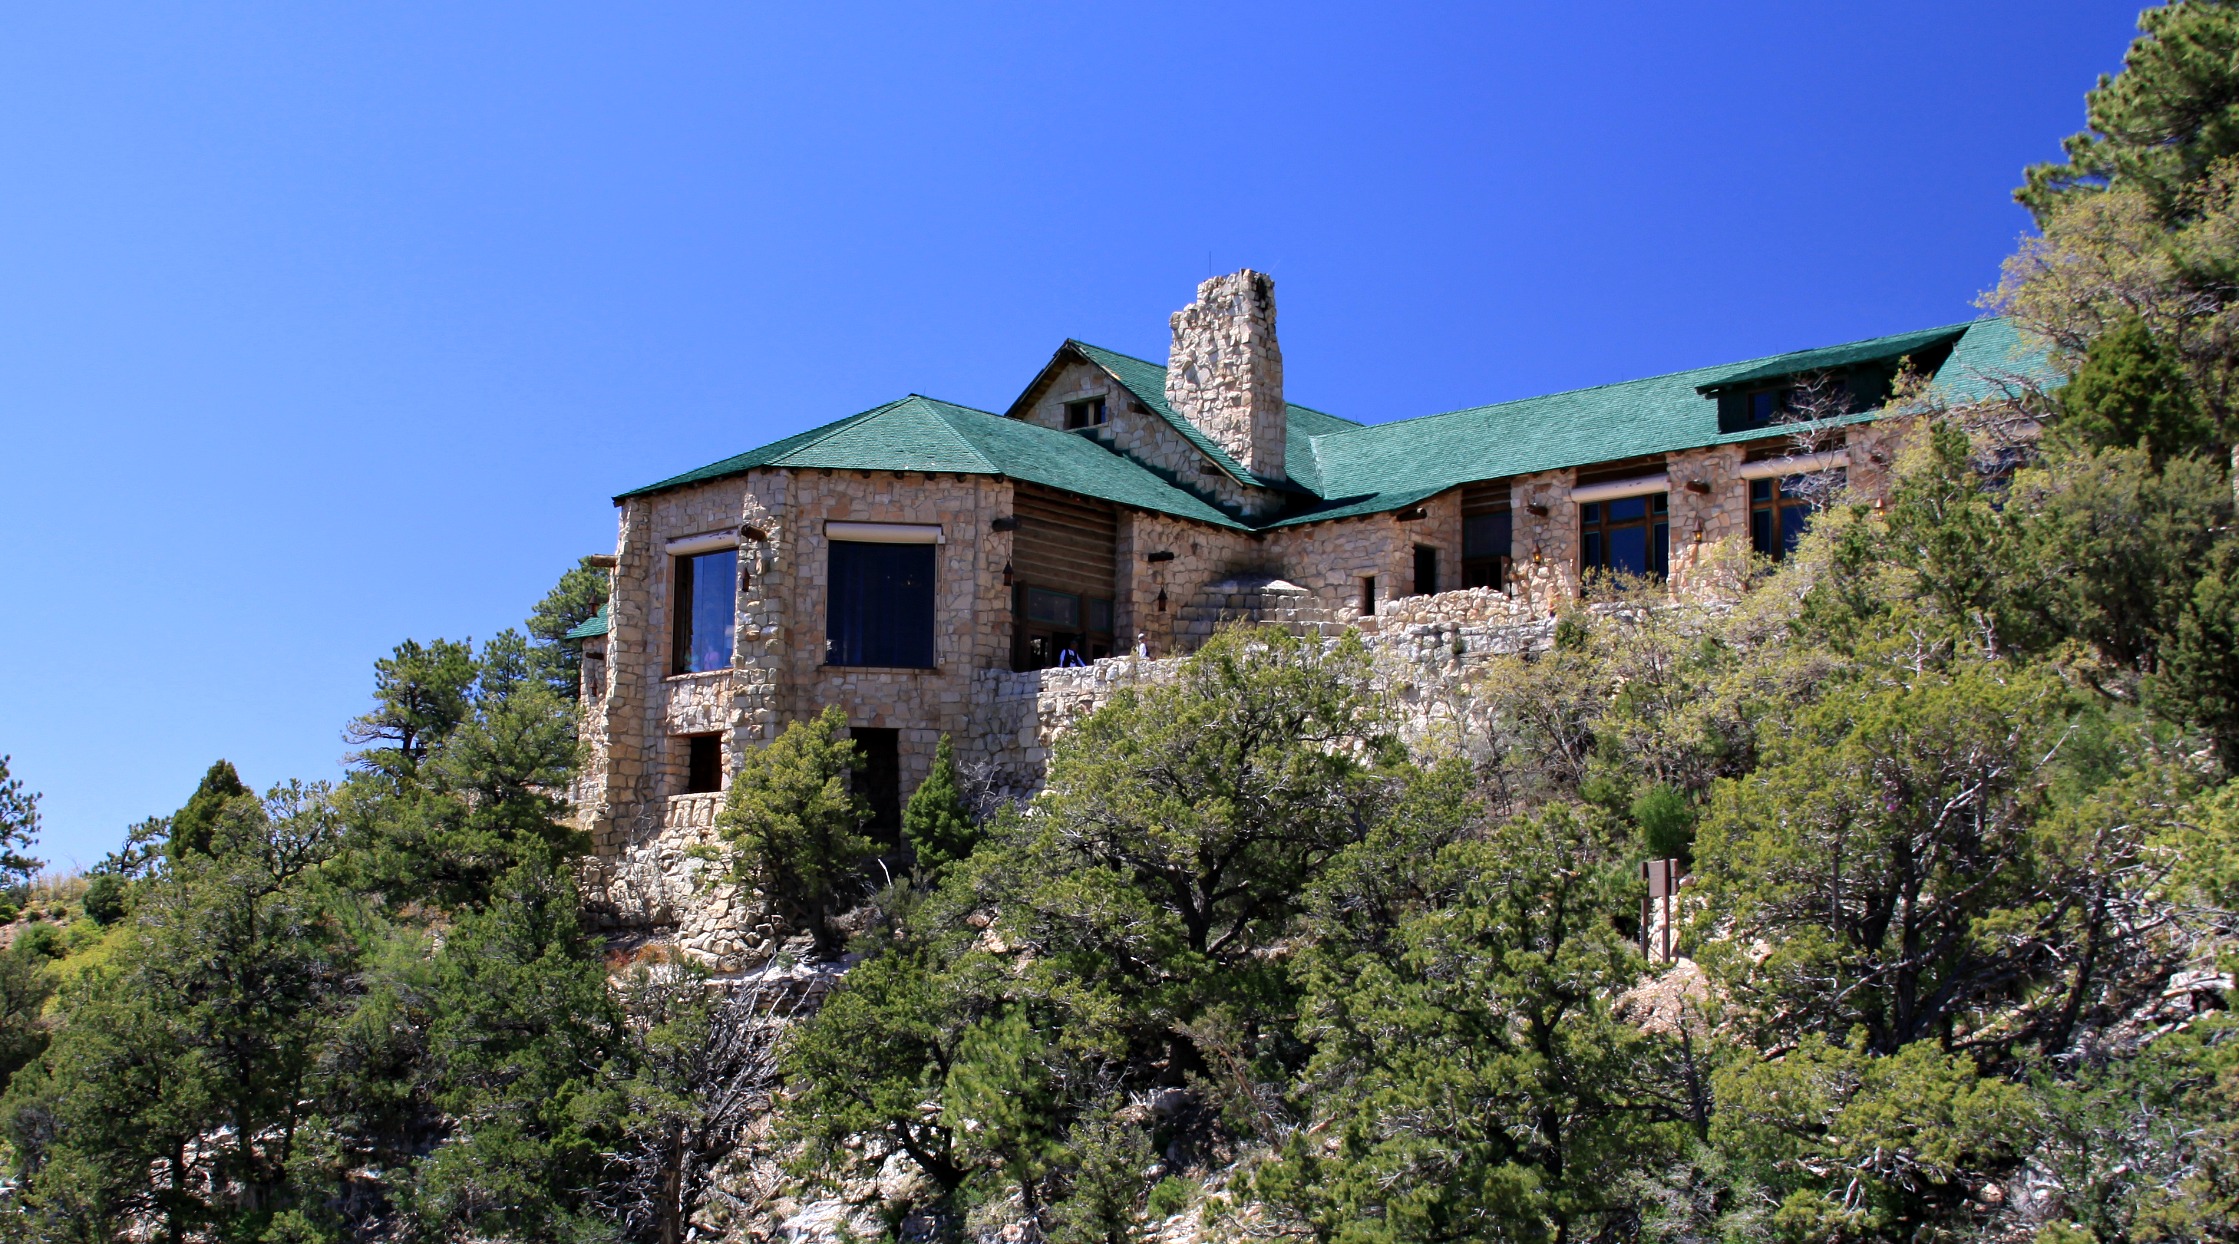 The Grand Canyon Lodge